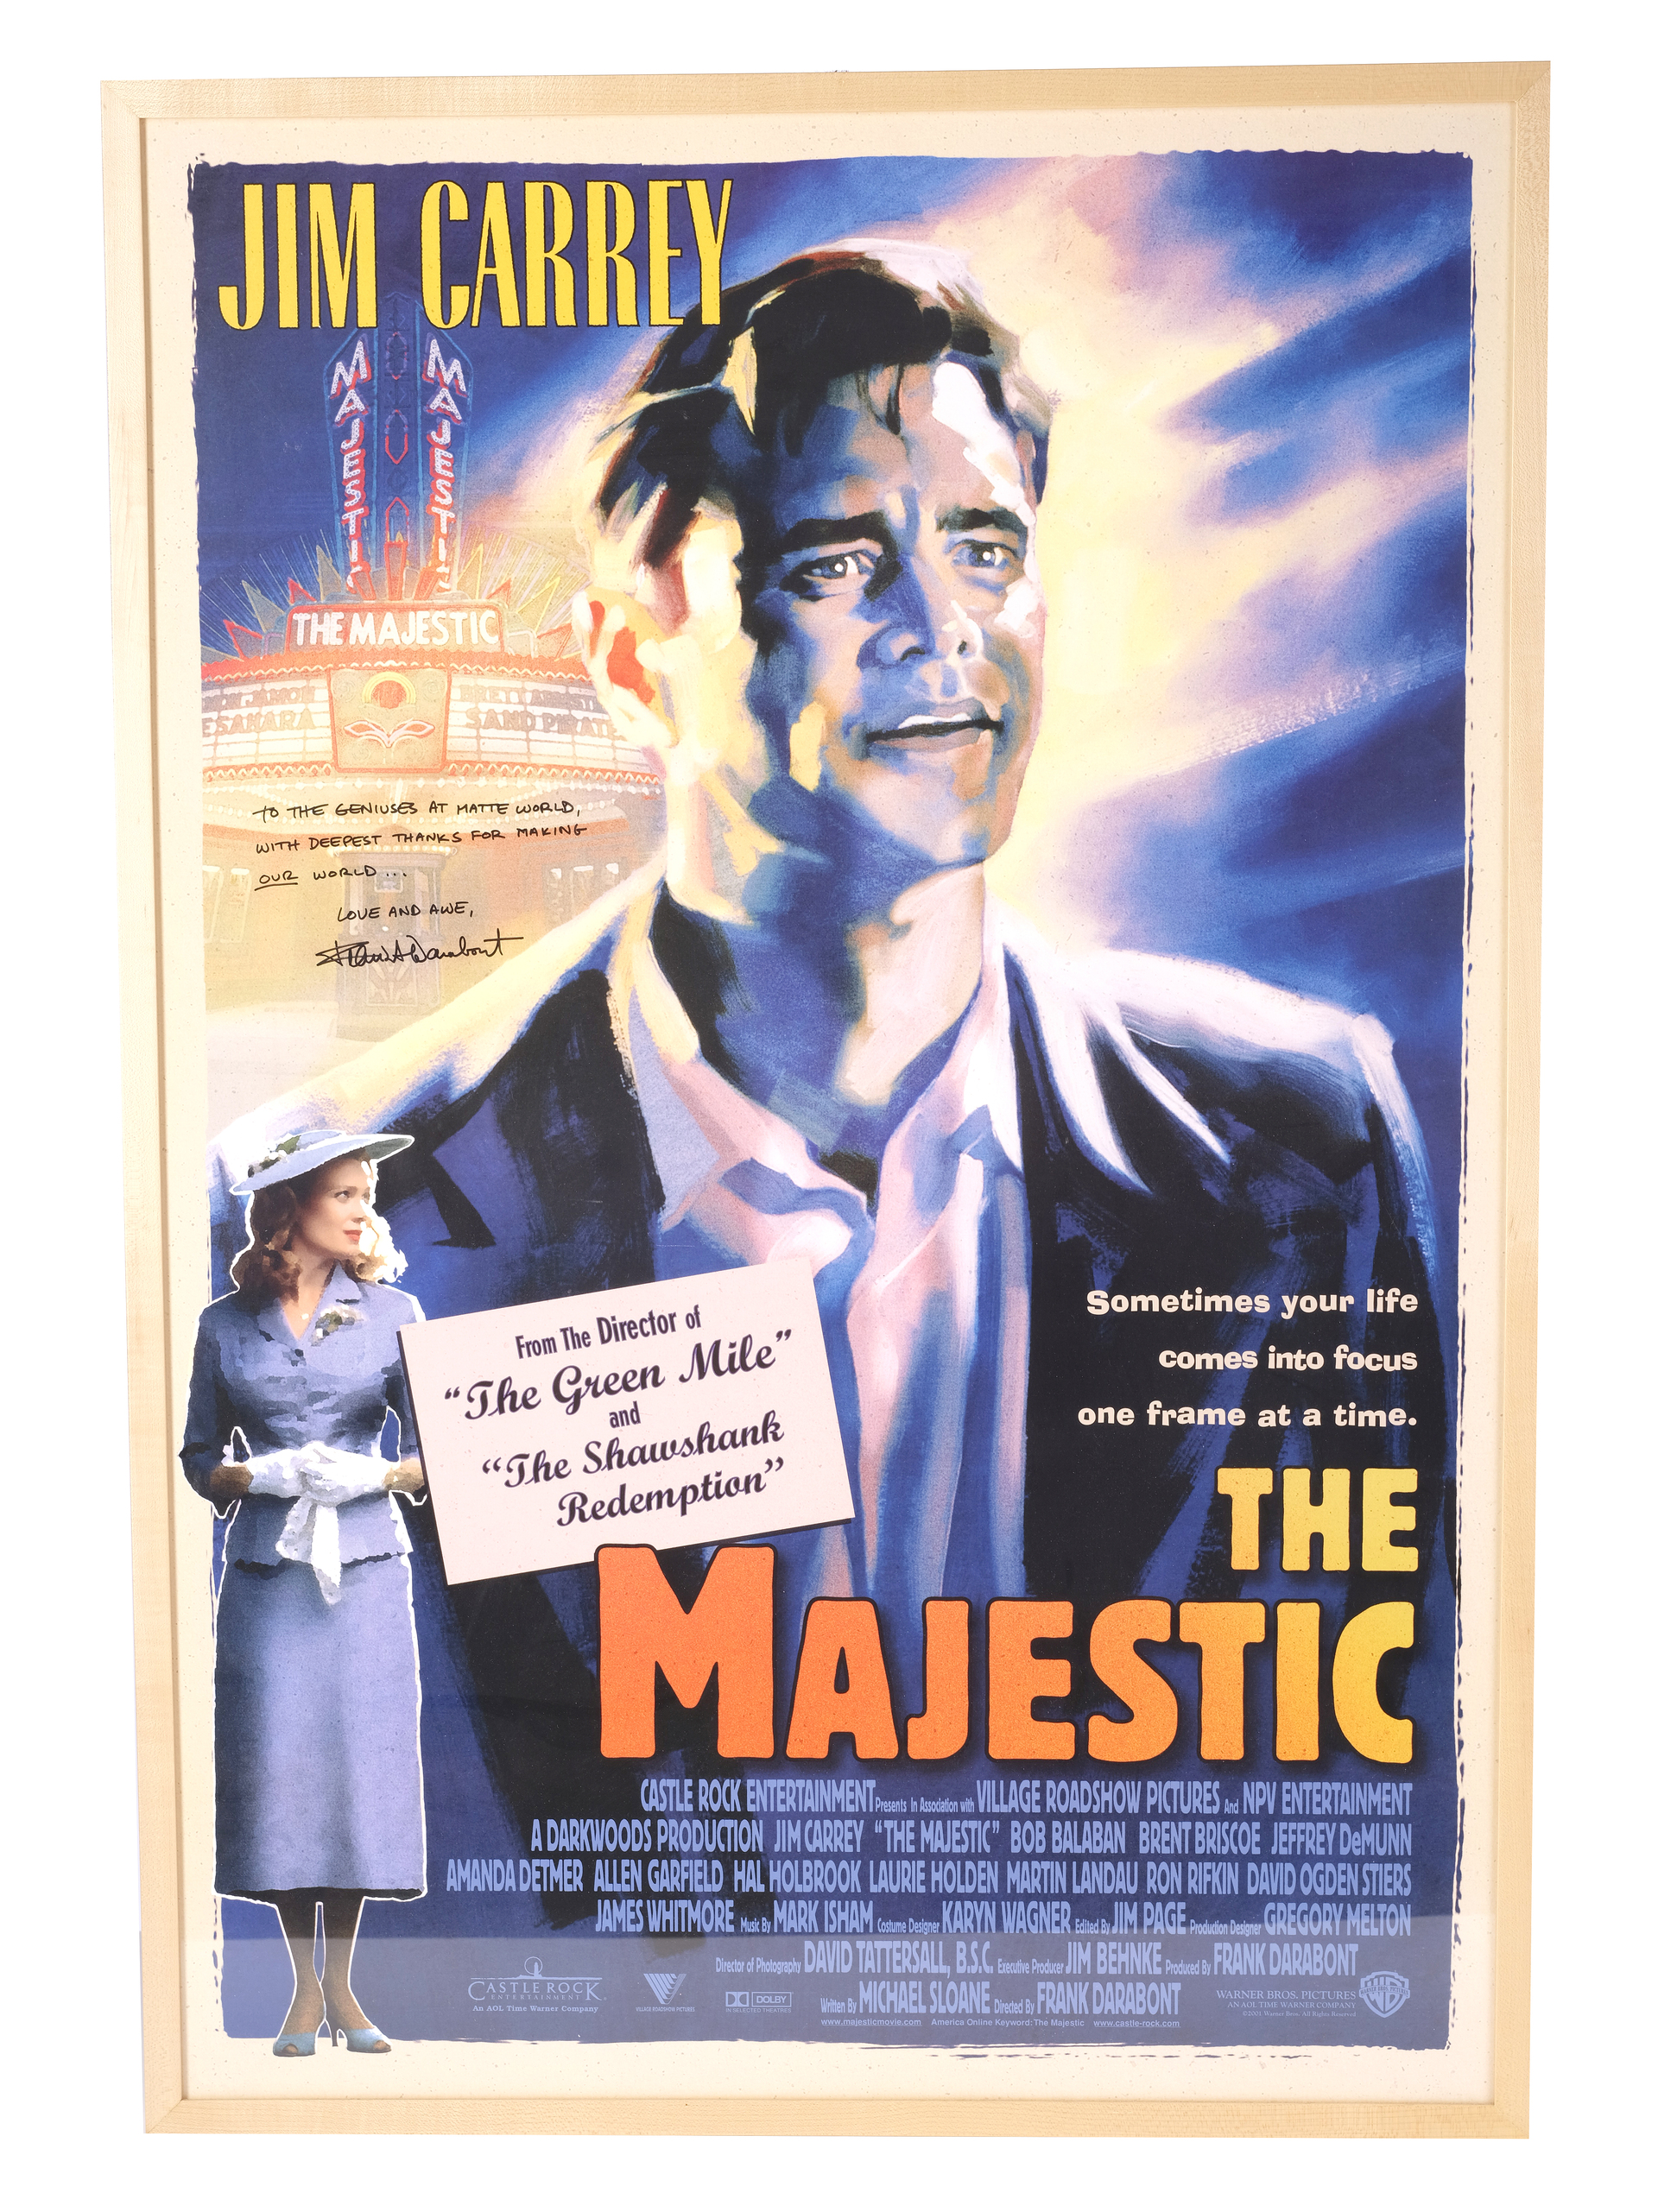 THE MAJESTIC (2001) - Framed Frank Darabont-Autographed One-Sheet